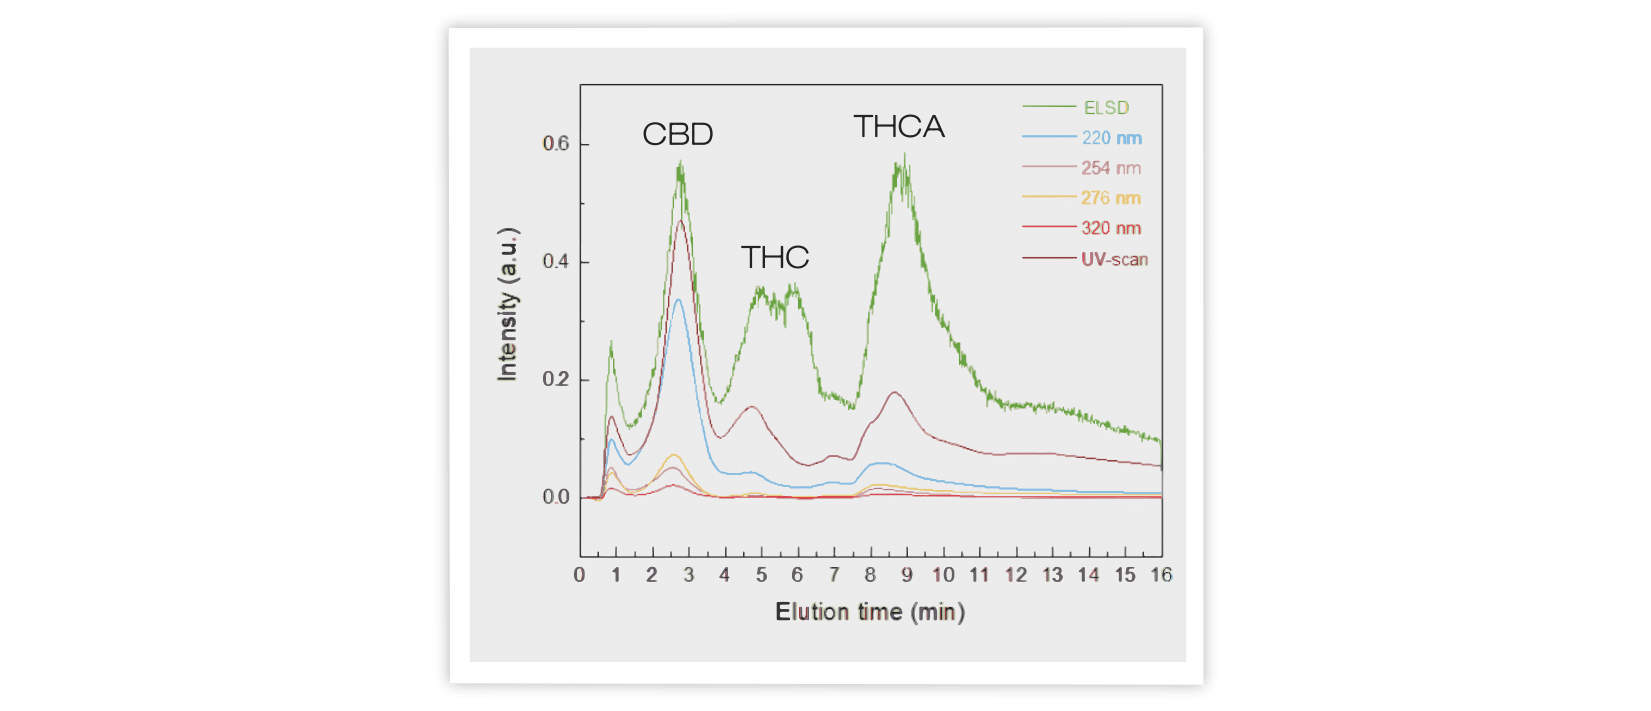 chromatography, cannabinoids, THC, CBD, THCA